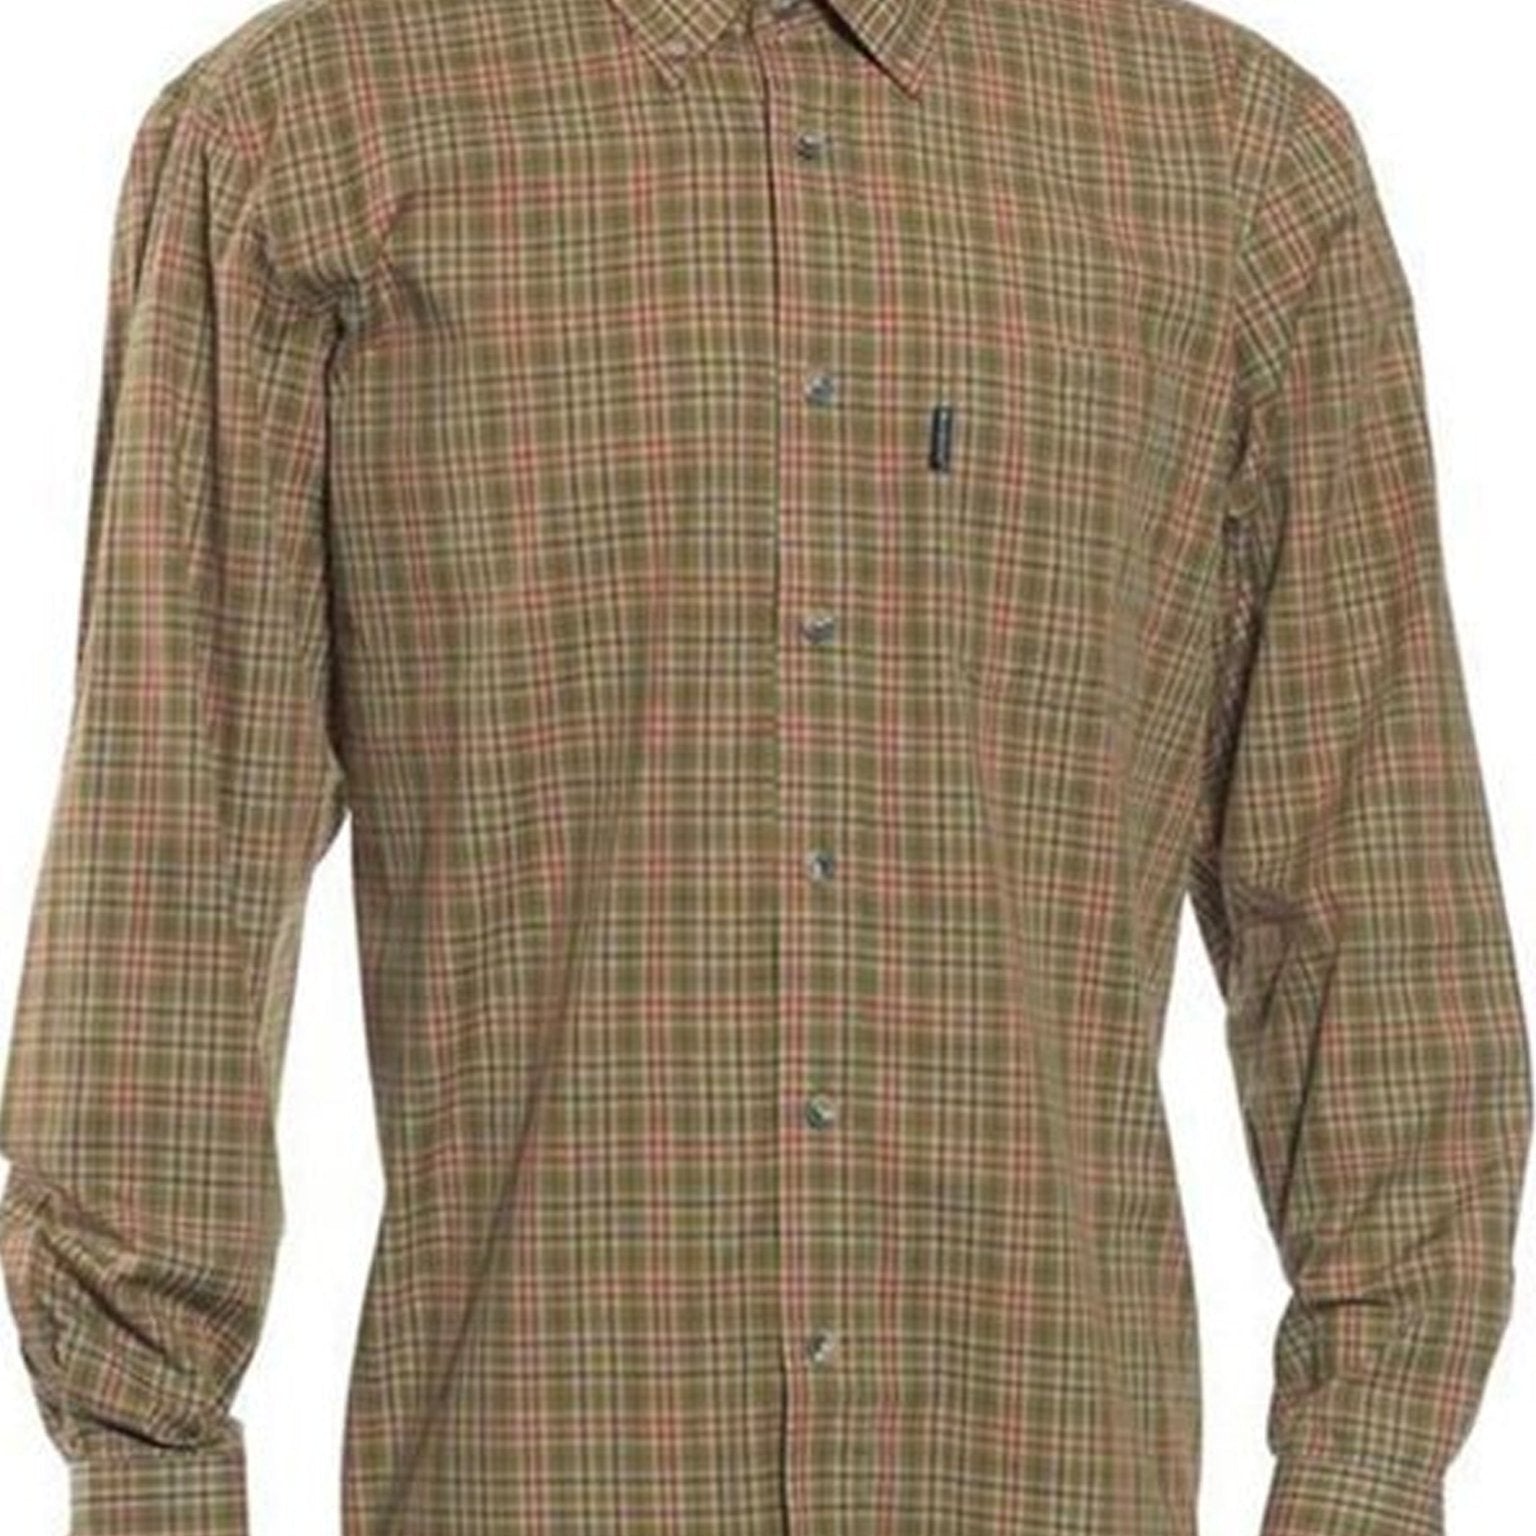 4elementsclothingDeerhunterDeerhunter - Marshall Mens Long Sleeve shirt / Mens Check Shirt / Country Mens ShirtShirt8467-499-3536